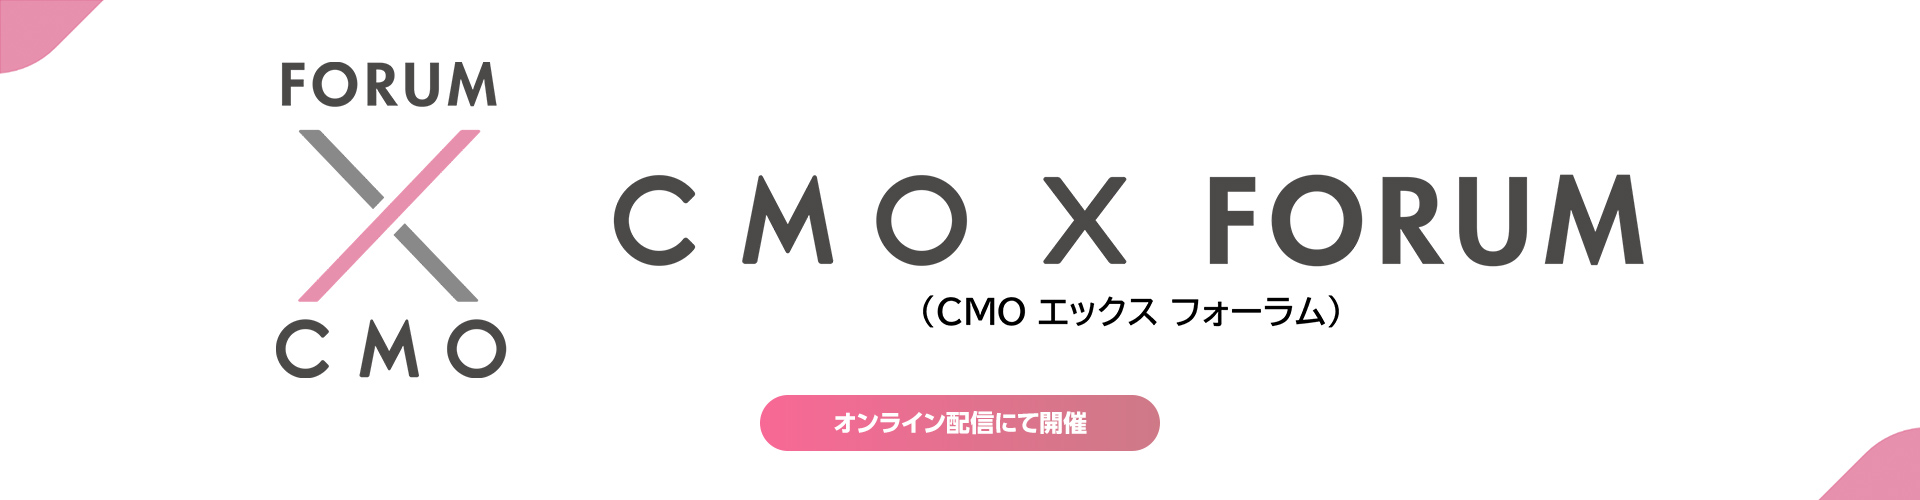 CMO X FORUM マーケターの集合知で、日本に突き抜けた成長力を生み出す。